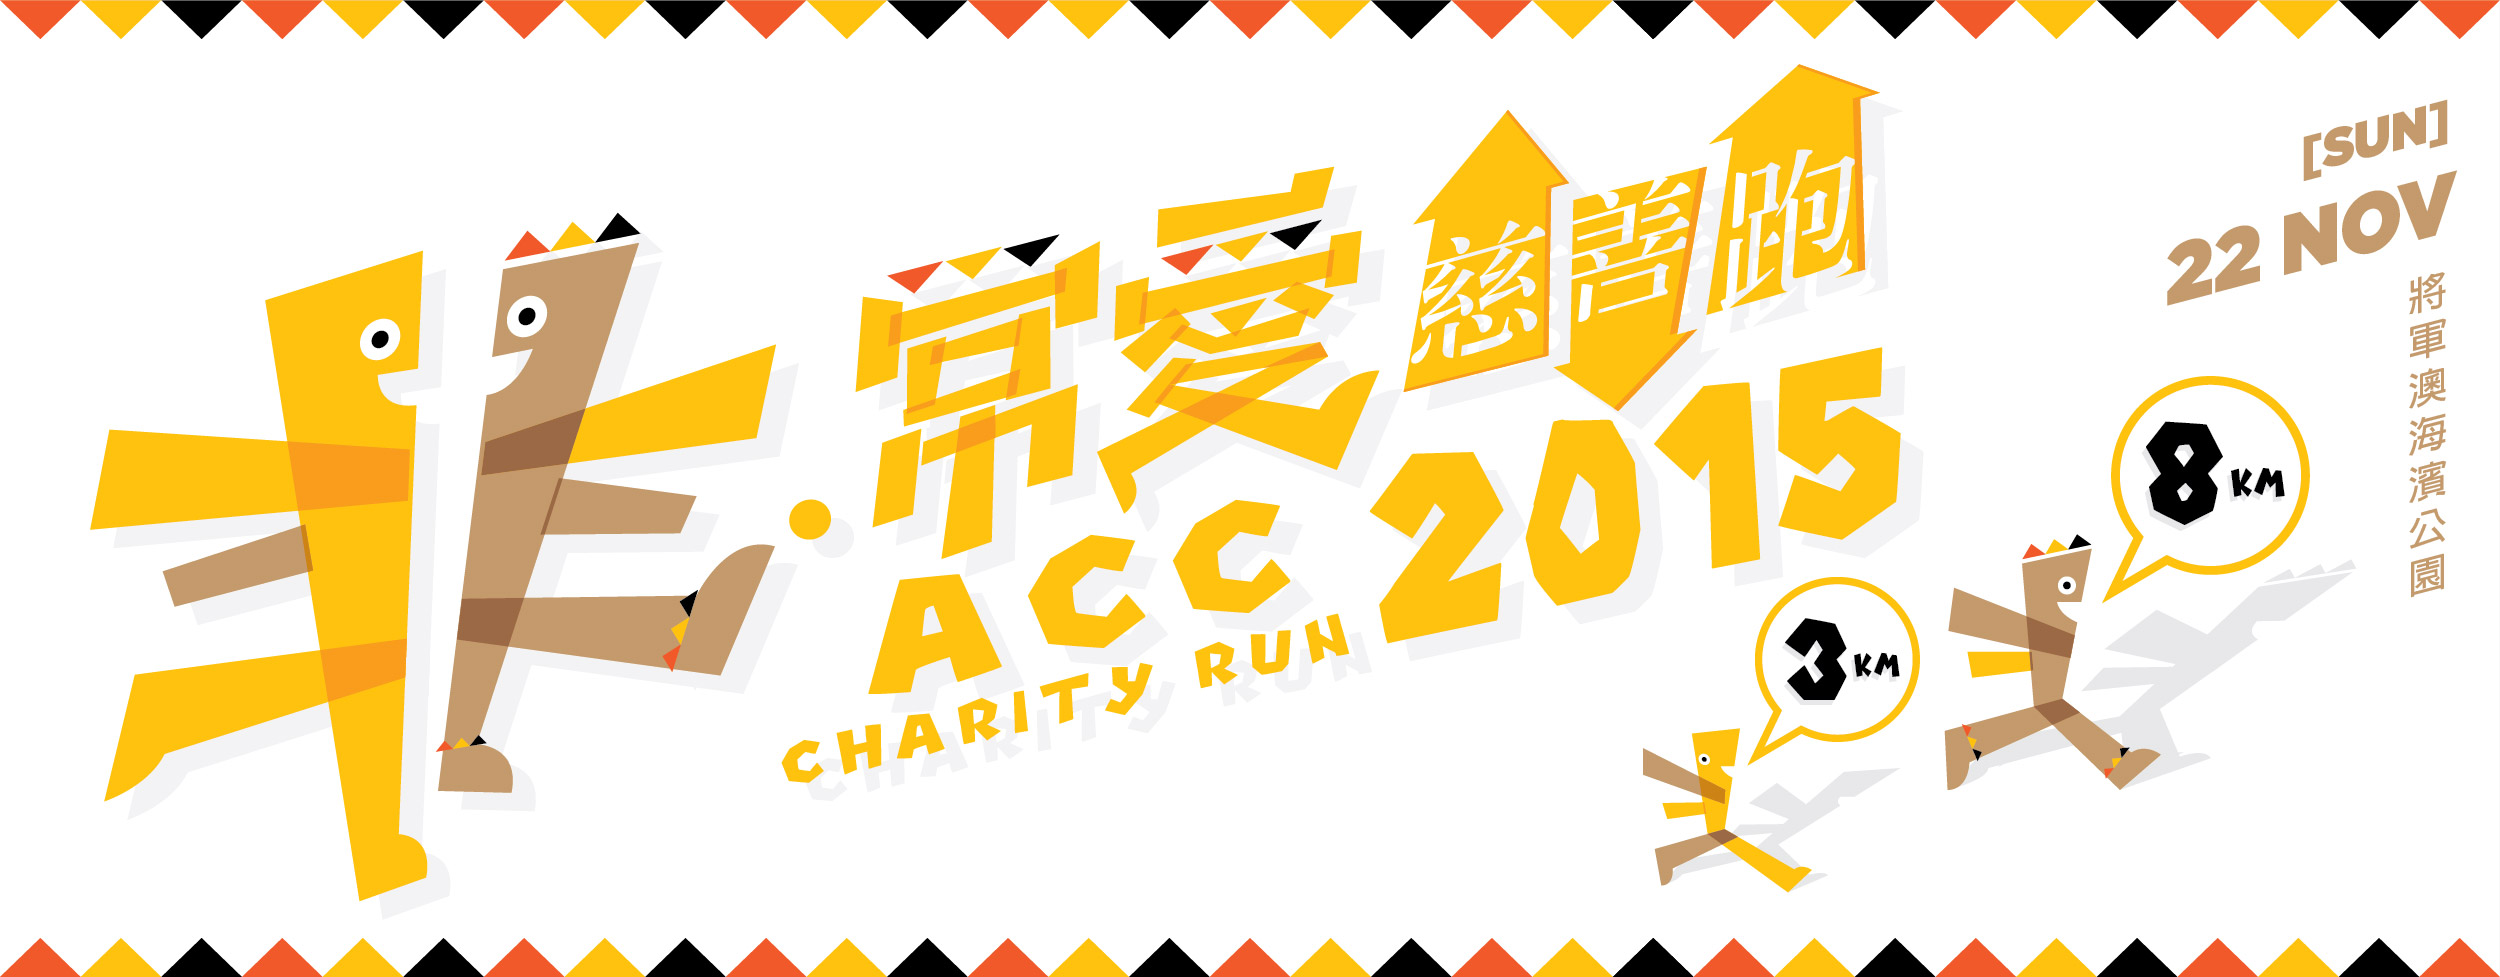 ACC Charity Run 2015